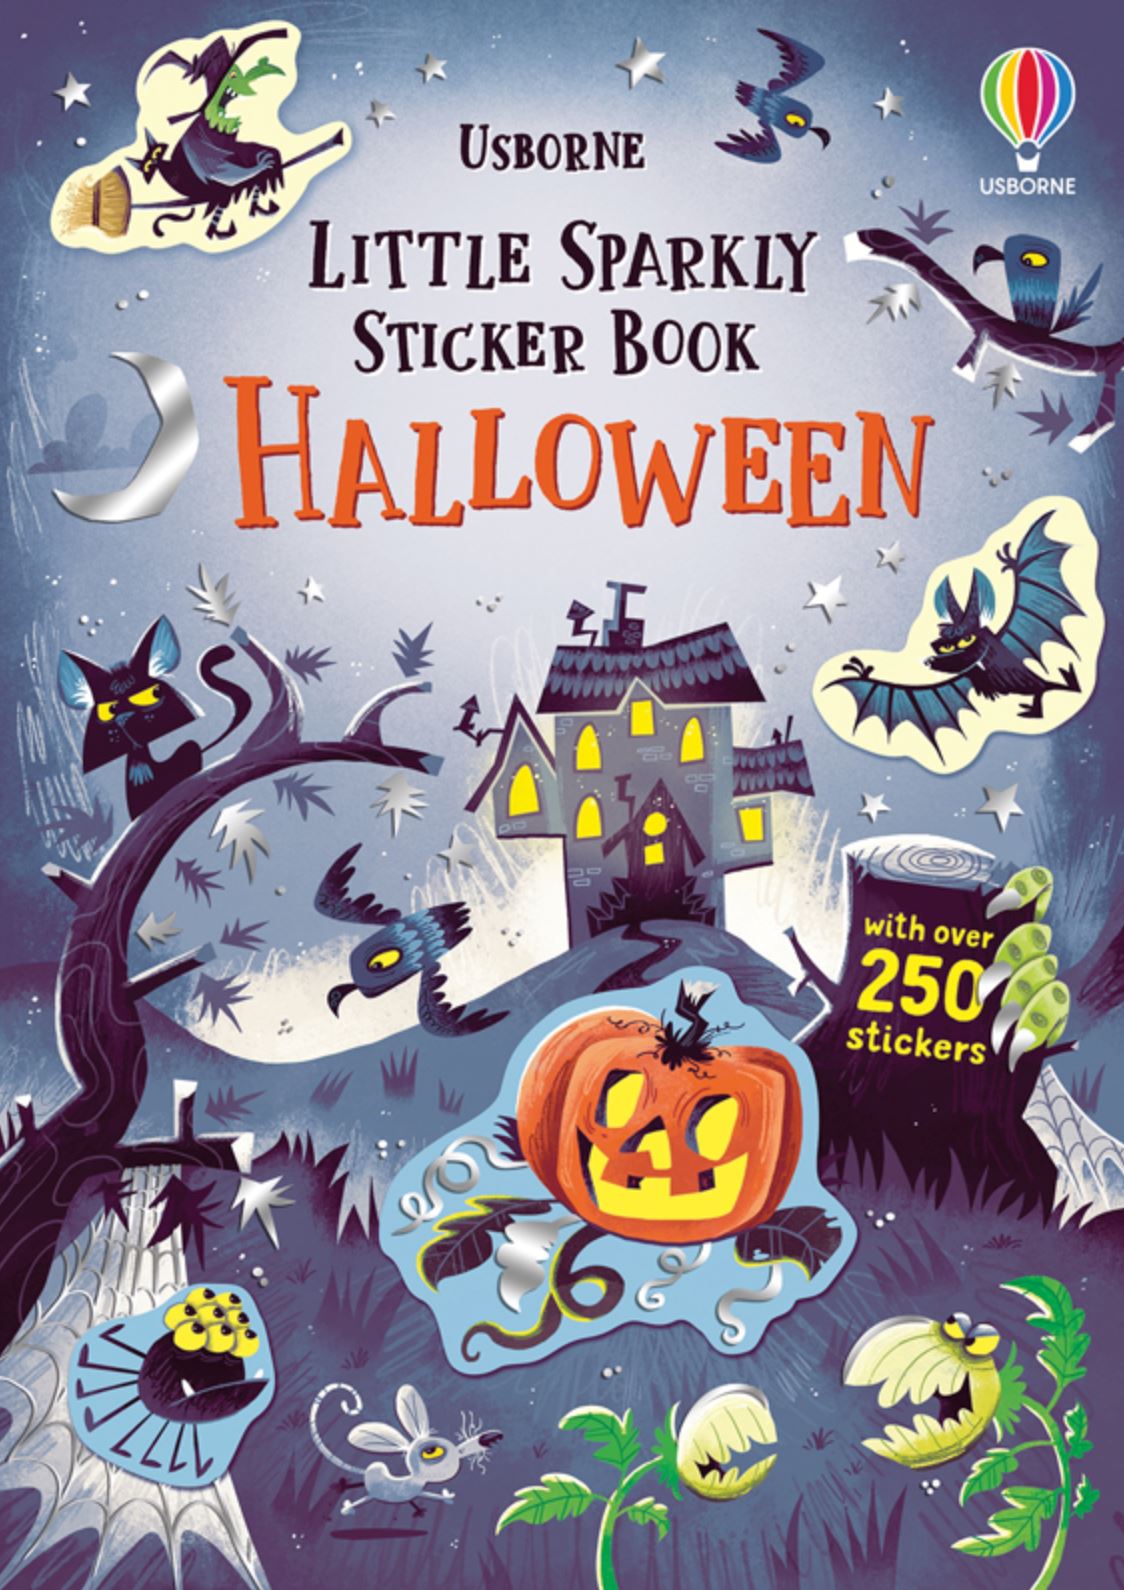 Little Sparkly Sticker Book Halloween — The Horseshoe Crab